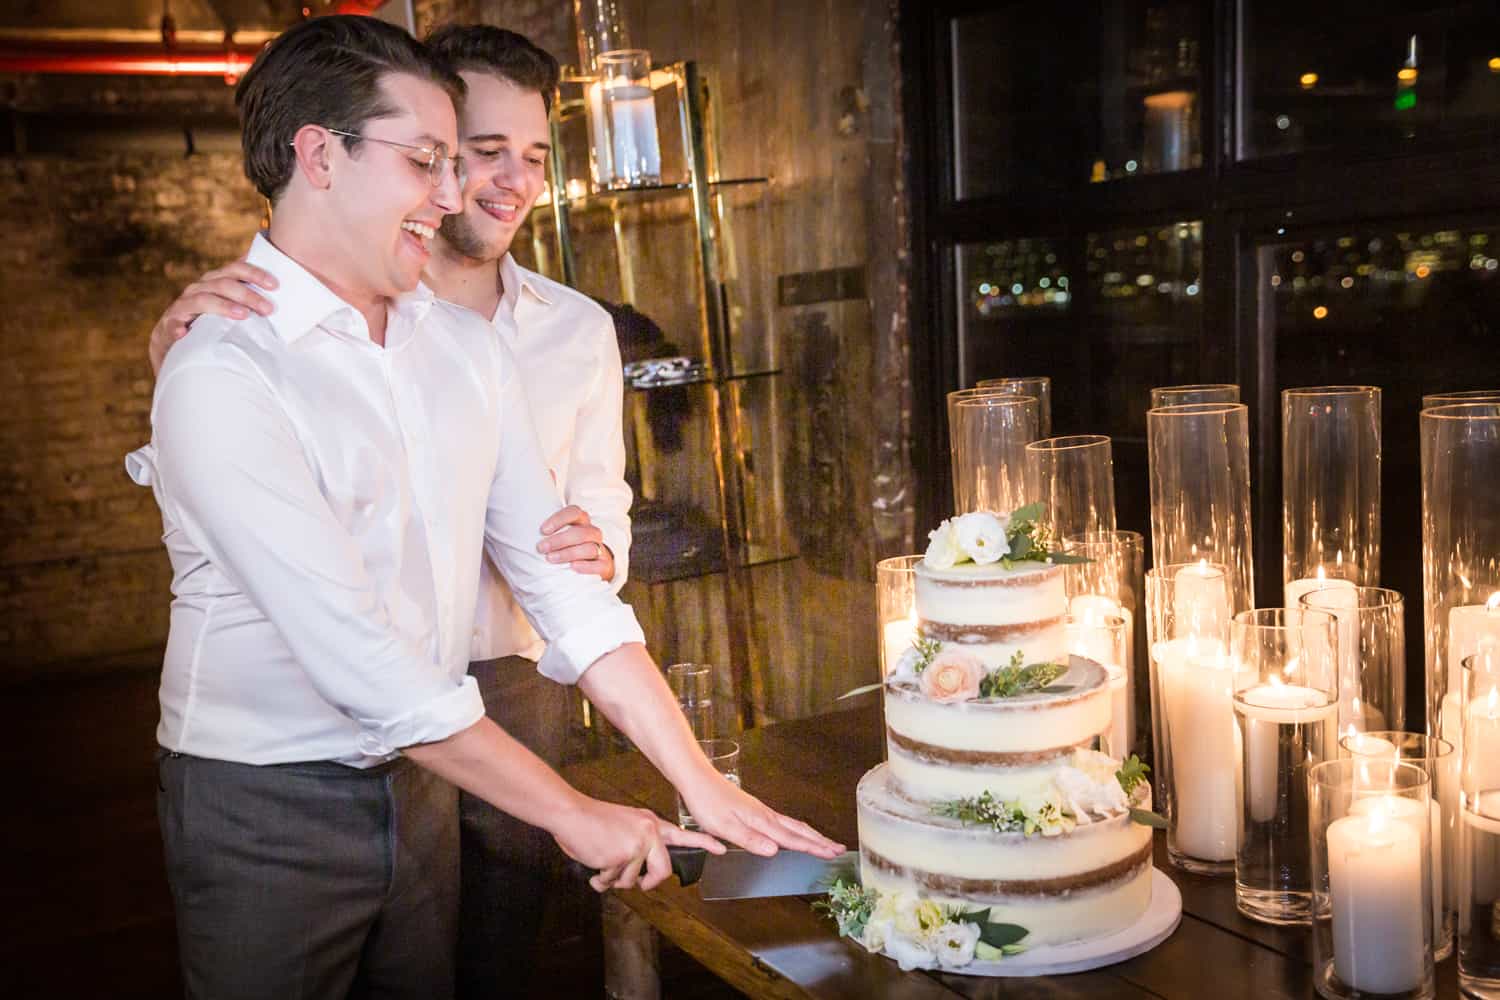 Greenpoint Loft wedding photos of two grooms cutting wedding cake